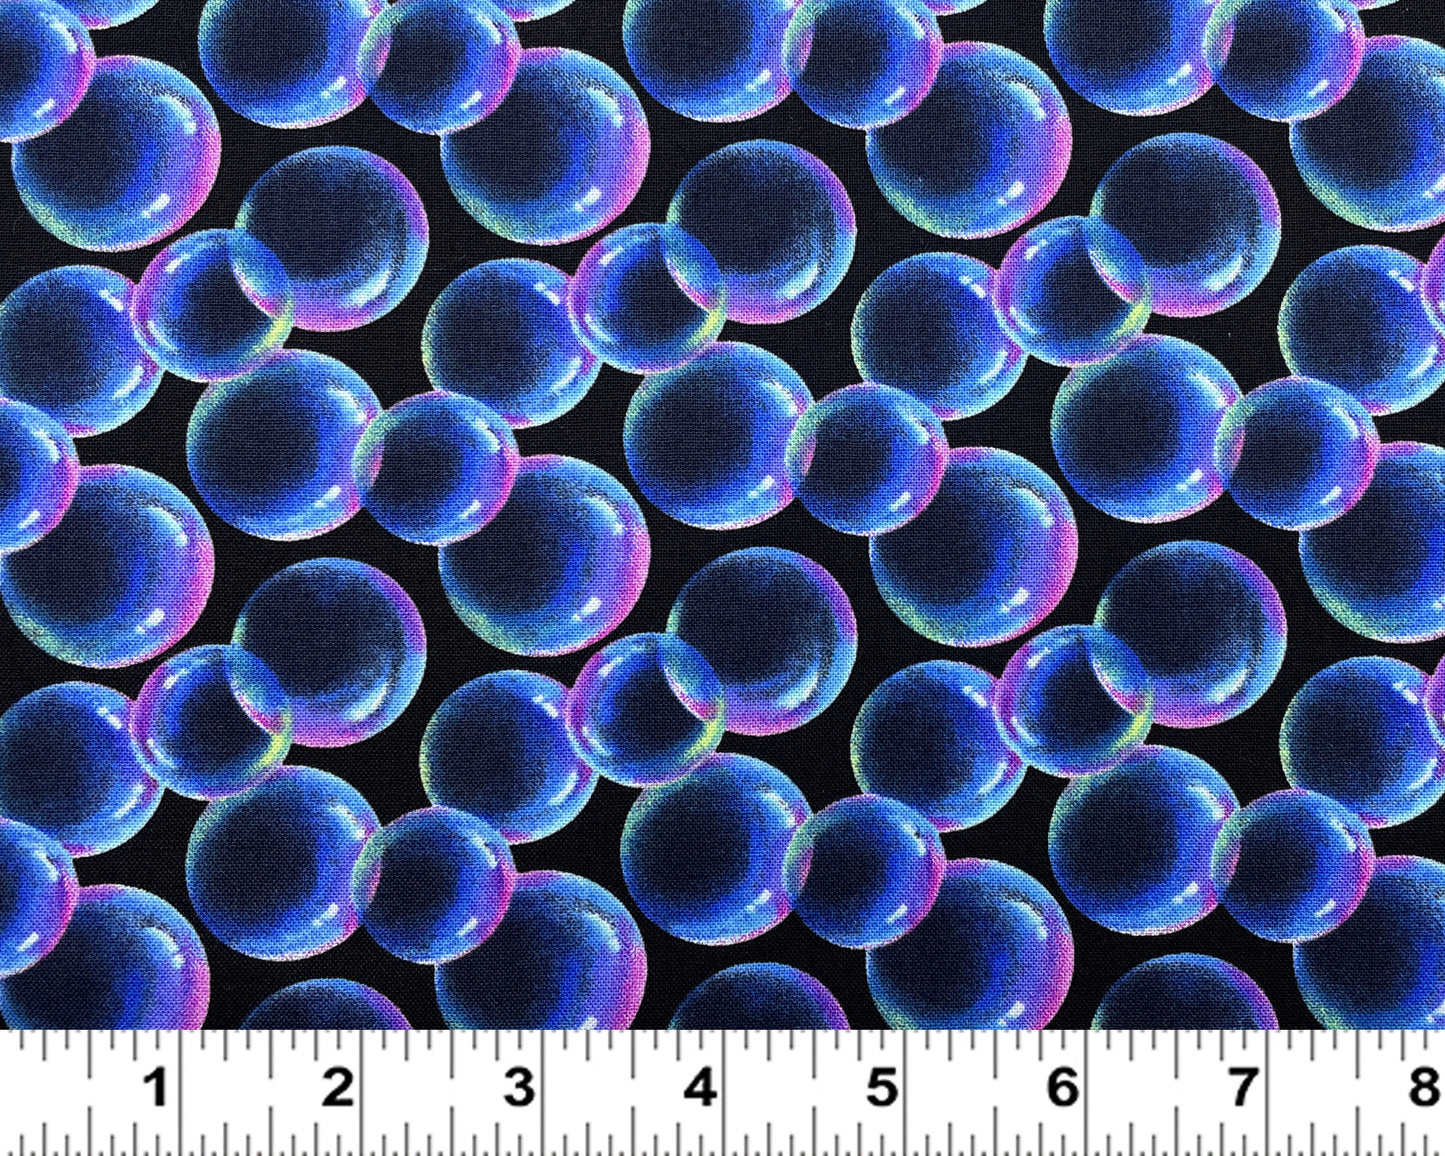 Bubble Fabric - StudioE - 100% Cotton - Disco Tech collection - Blowing bubbles bathtub theme groomer material bubble print - Ships NEXT DAY